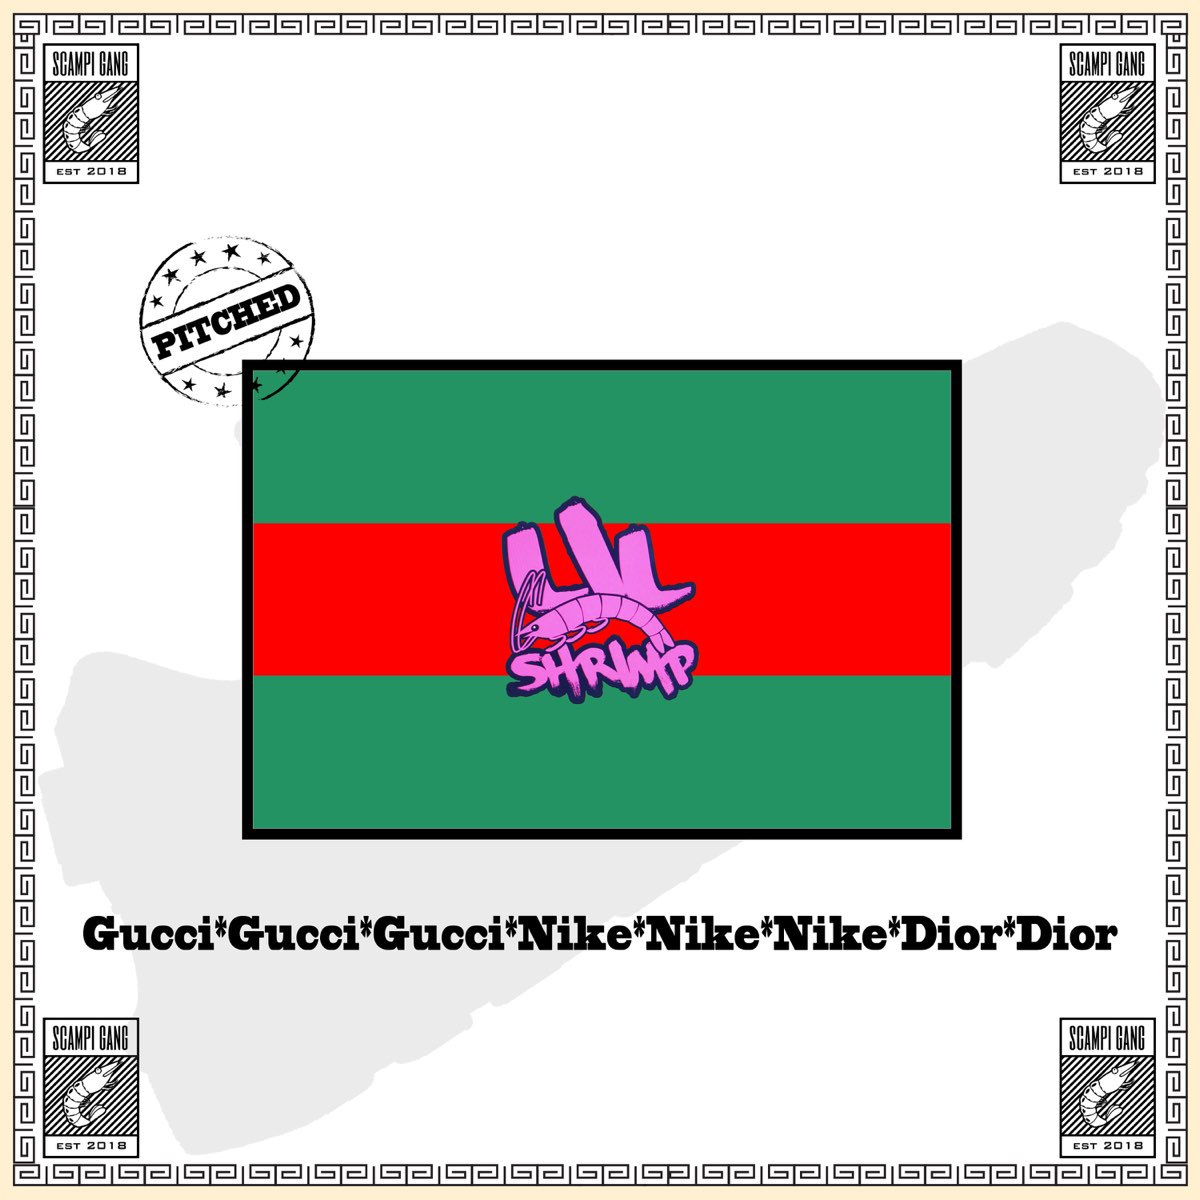 Gucci Gucci Gucci Nike Nike Nike Dior Dior (Pitched) - Single - Album by  Lil Shrimp - Apple Music